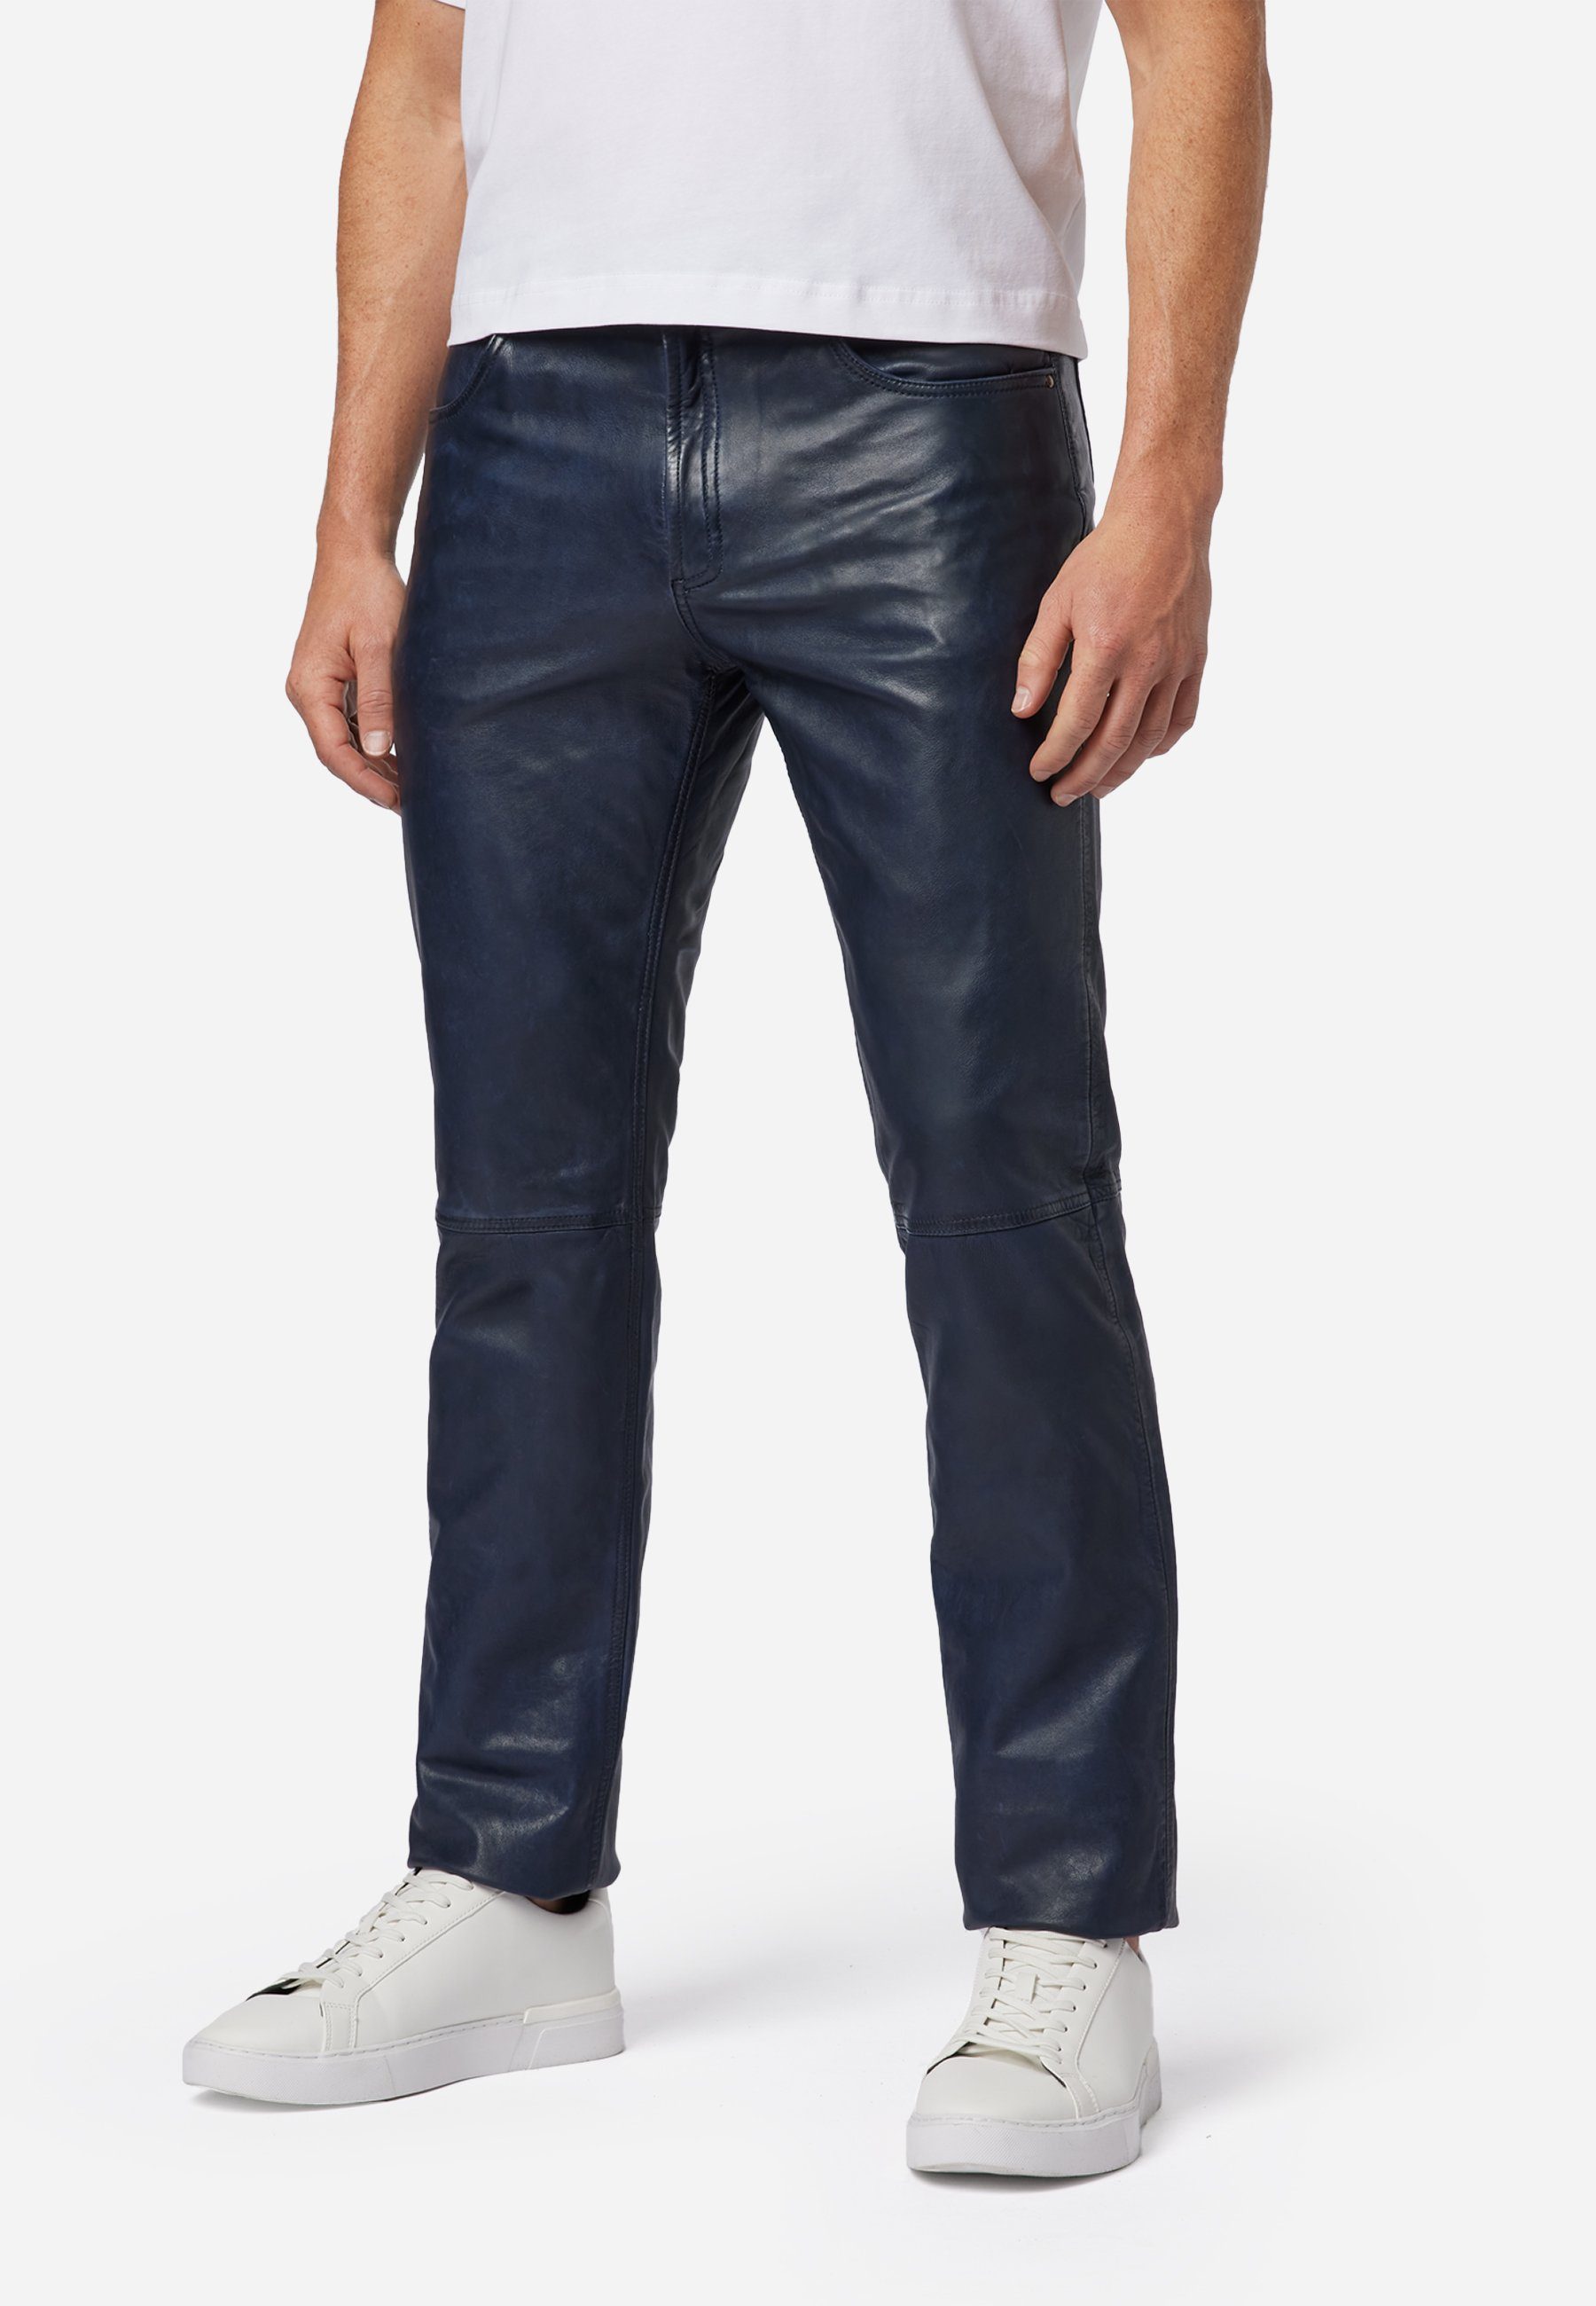 RICANO Lederhose Trant Pant Hochwertiges Lamm-Nappa Leder; 5-Pocket Jeans-Optik Blau